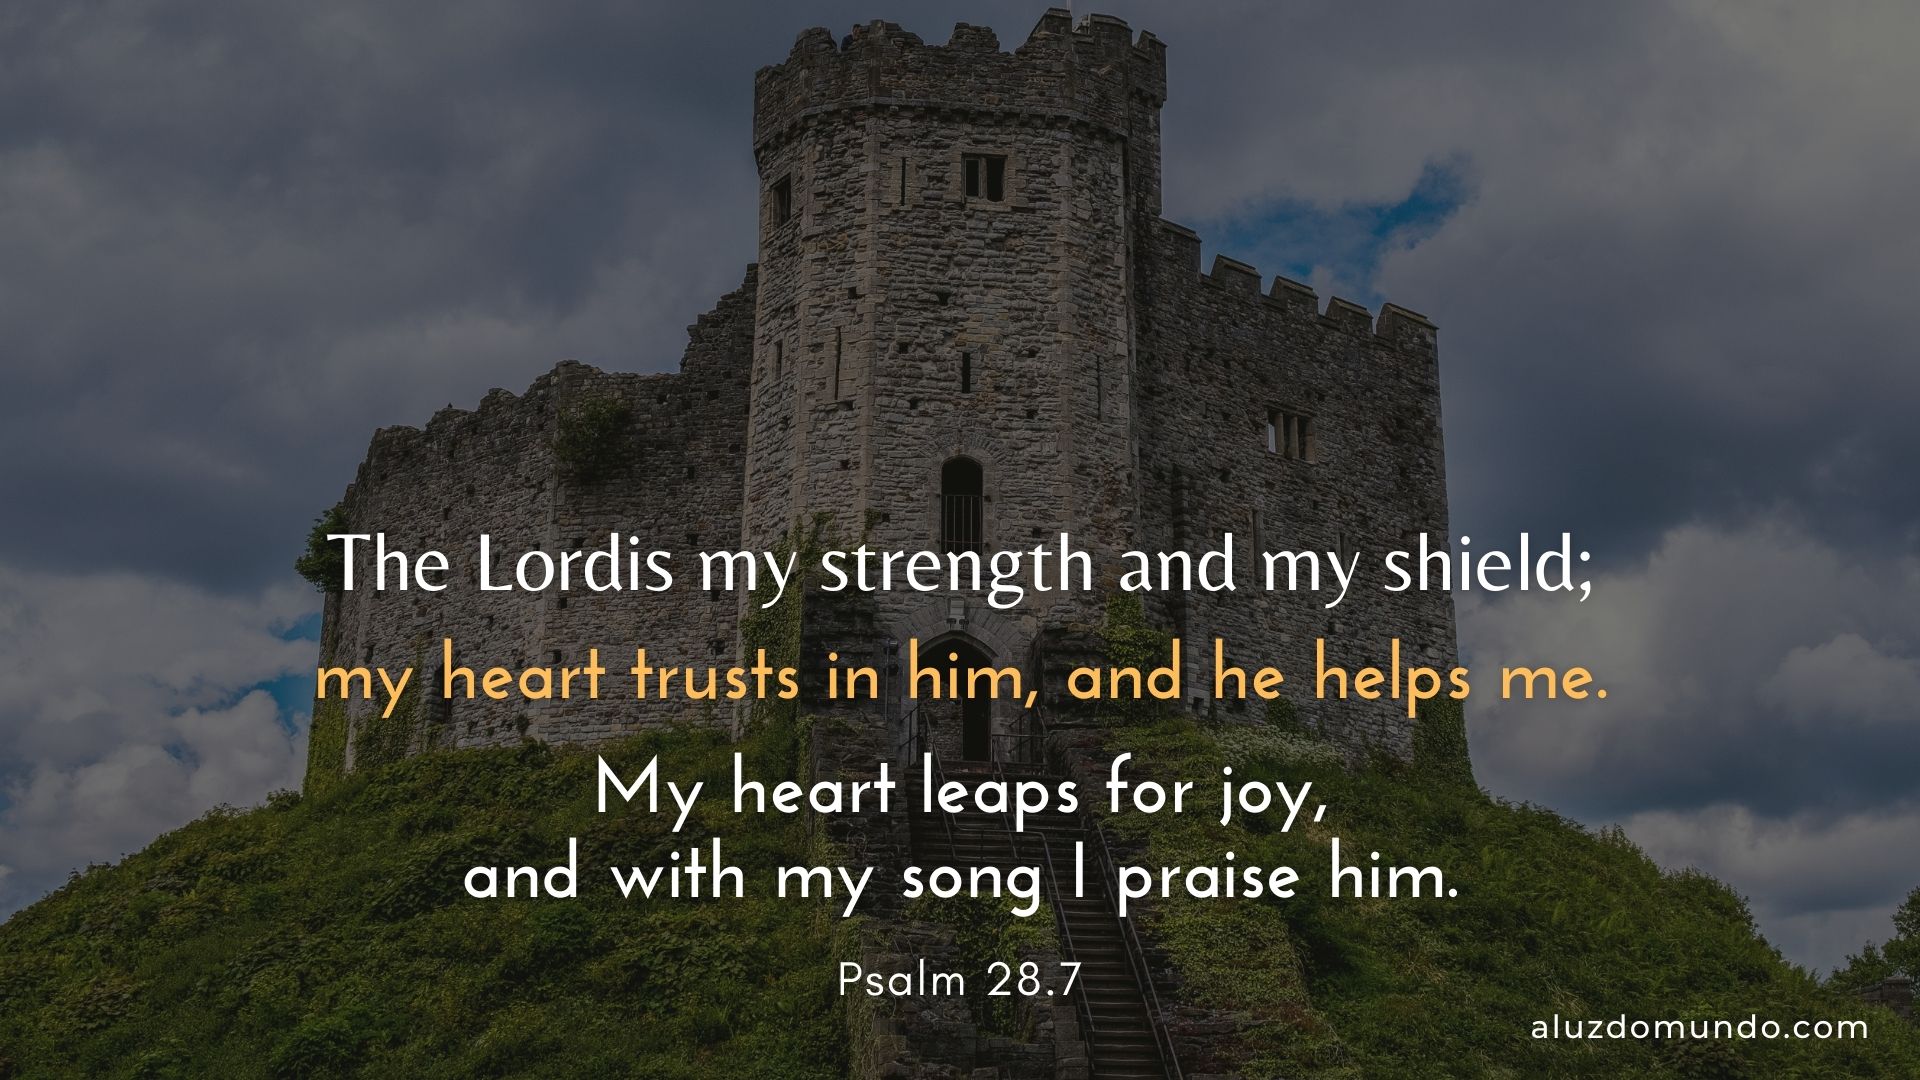 Psalm 28.7